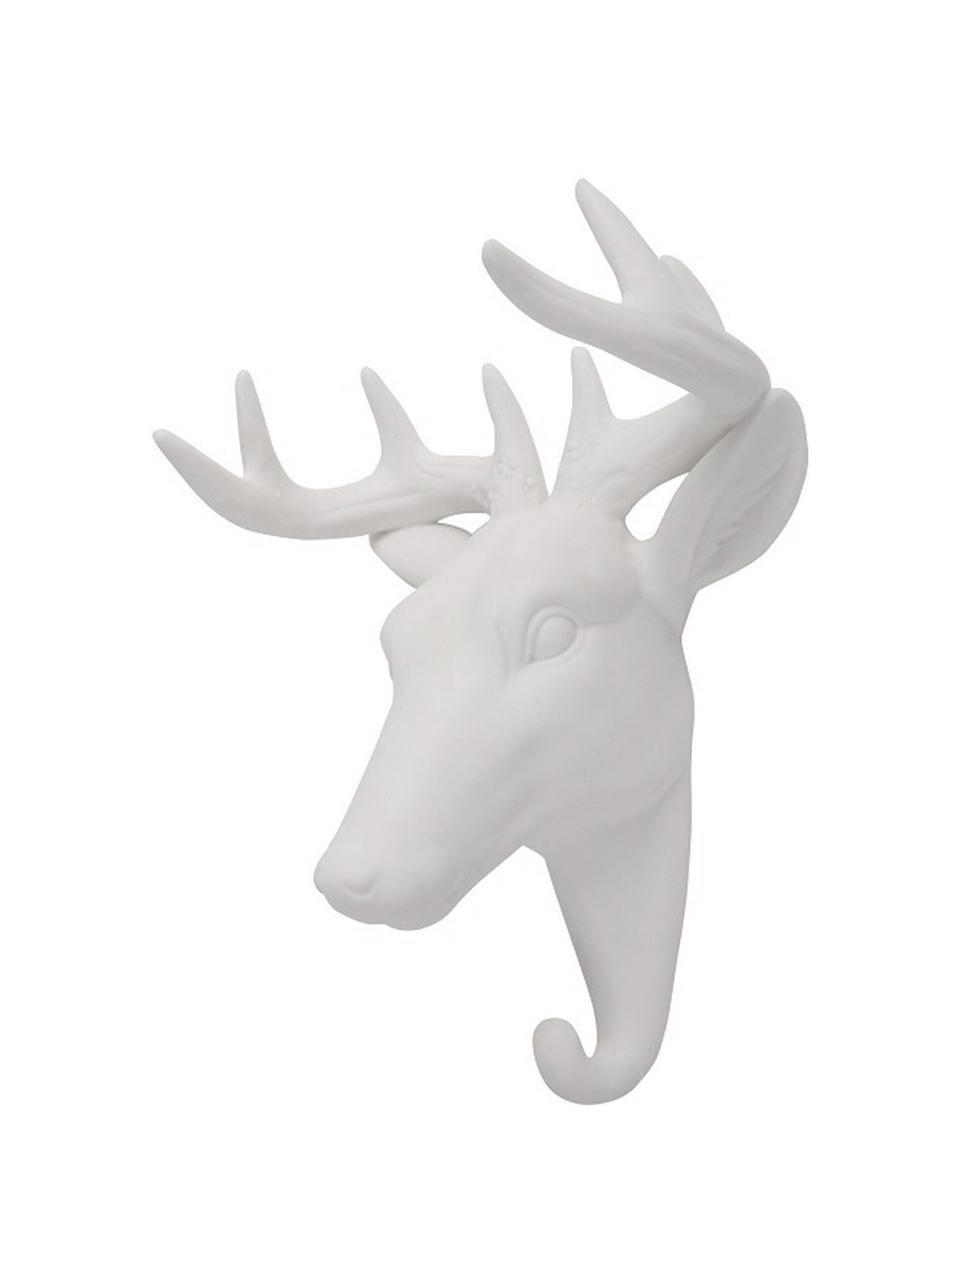 Wandhaken Deer aus Porzellan, Porzellan, Weiß, H 16 cm